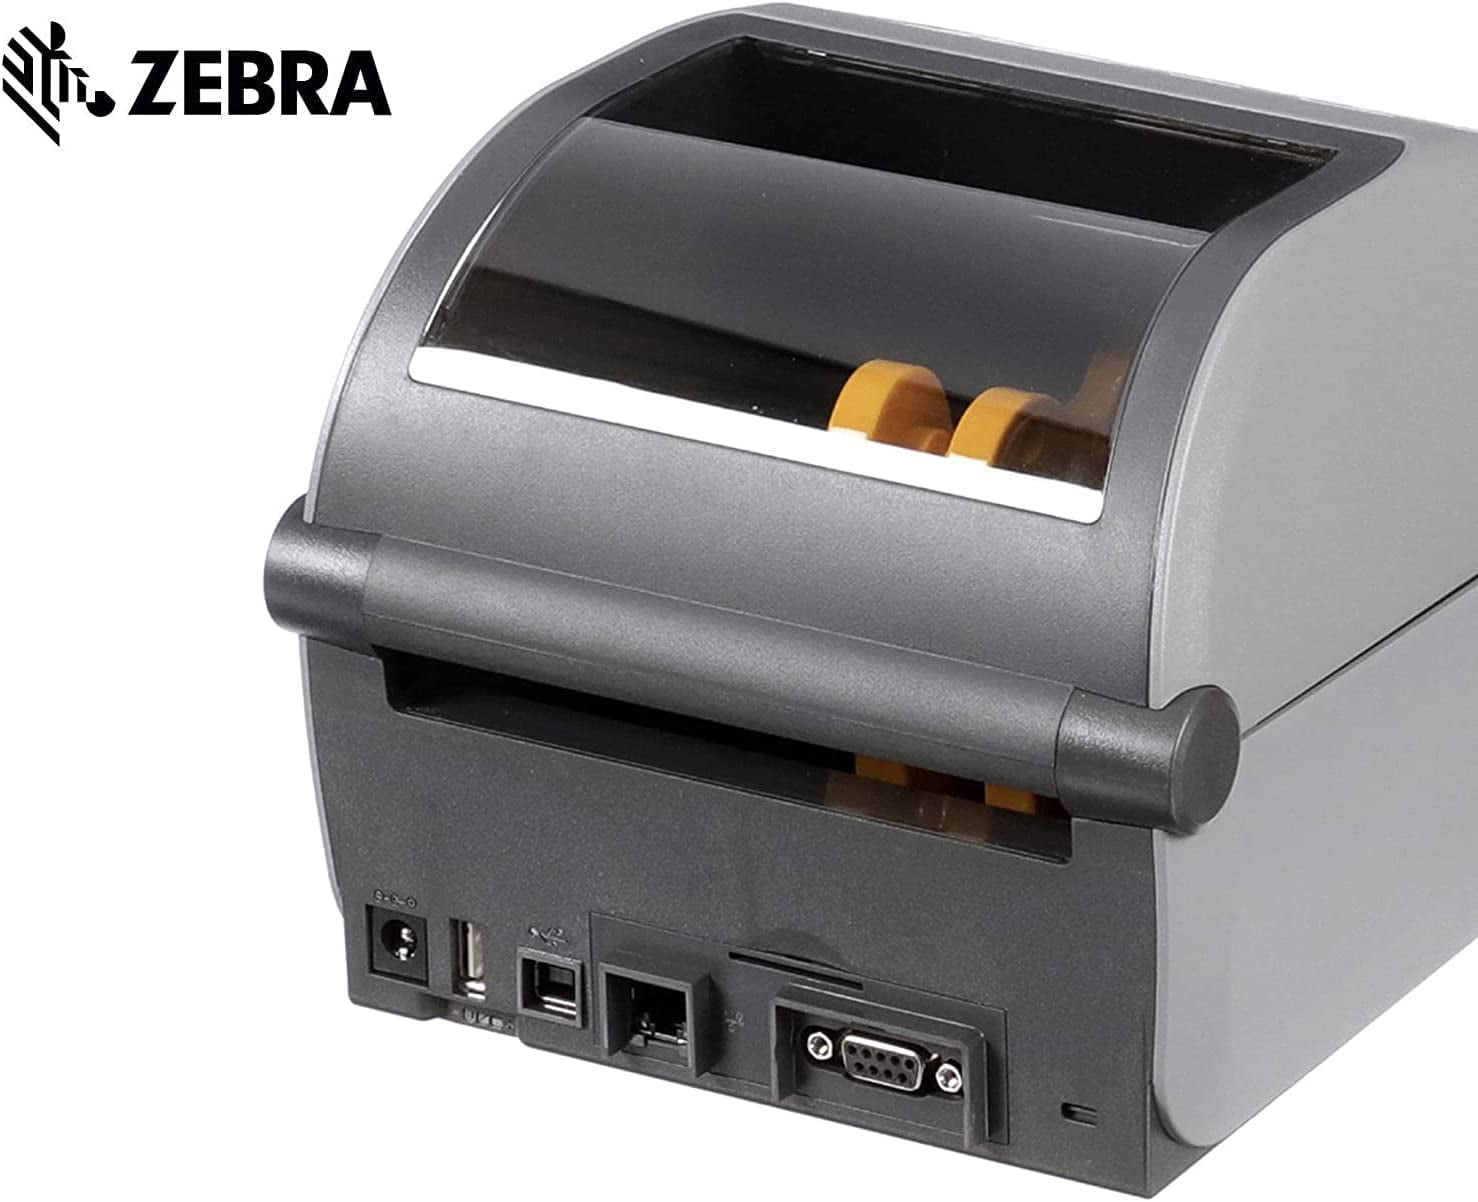 Zebra ZD620 Direct Thermal Desktop Printer Serial, USB, Ethernet,  Bluetooth Connectivity, 203 dpi, 4.09